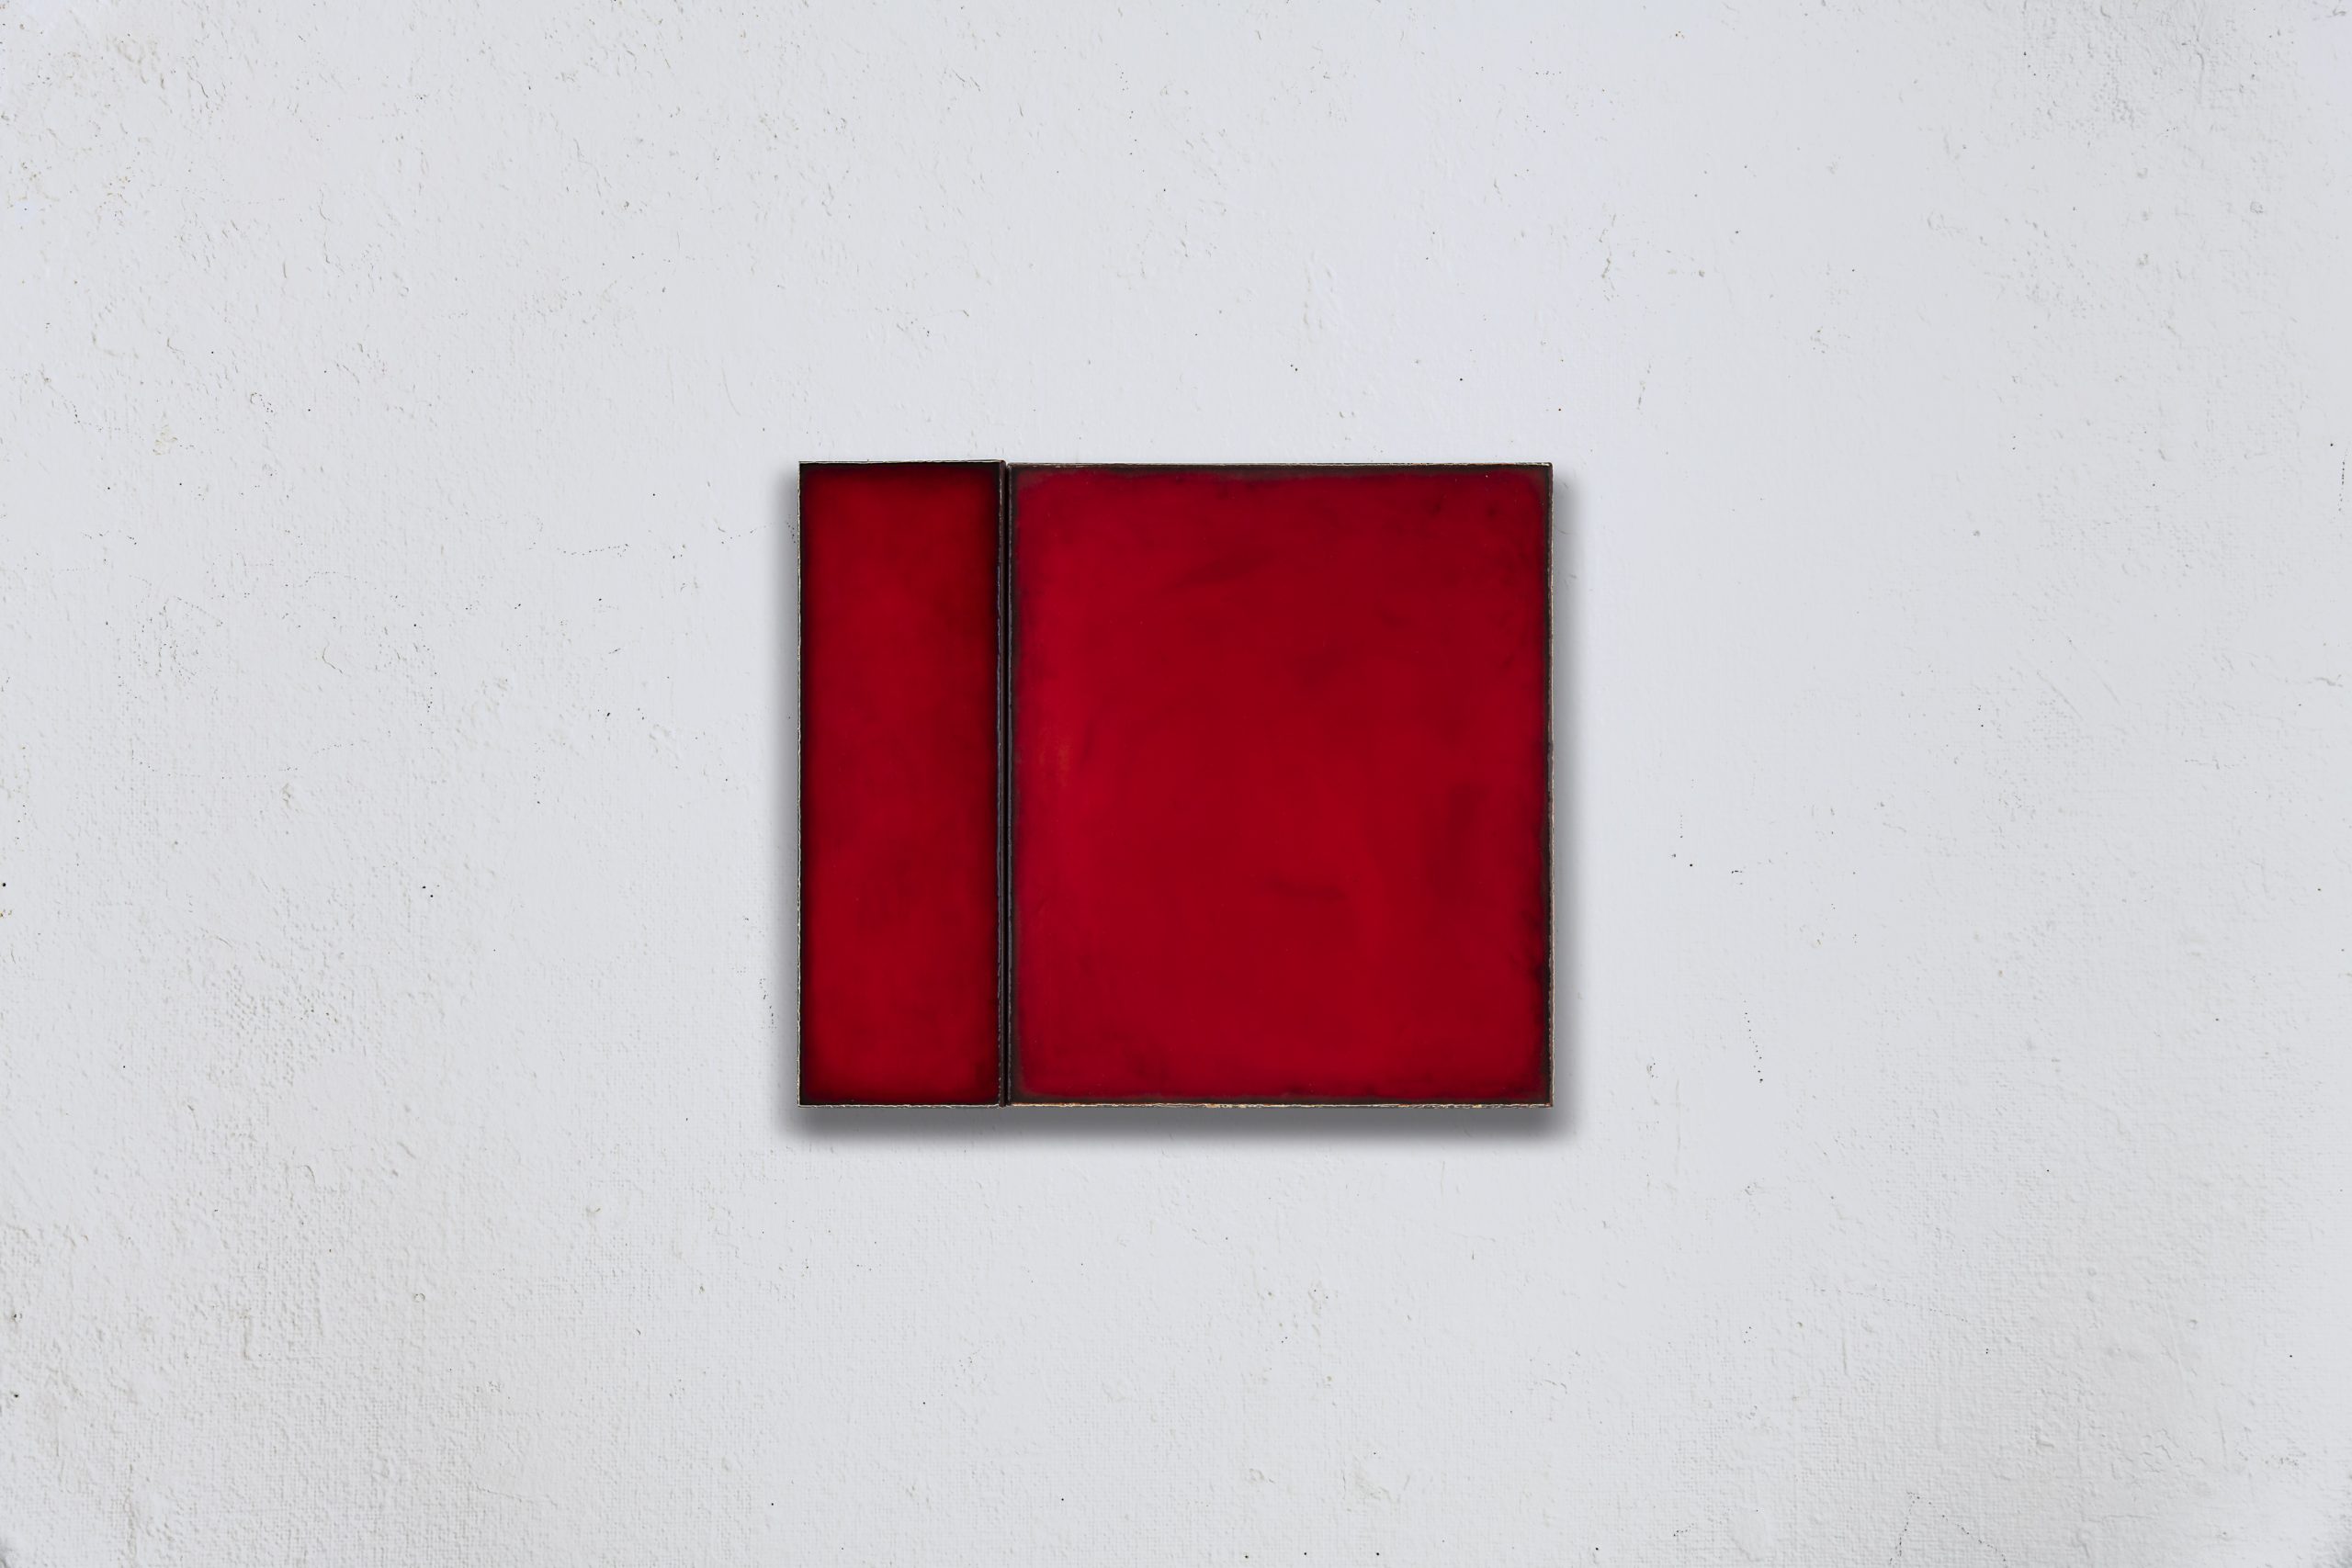 Toshinobu Matsuura, (Right) Red 477, 2021, h60.8×w50.5cm; (Left) Red 501, 2021, h60.8×w19.0cm, Acrylic, oil, resin